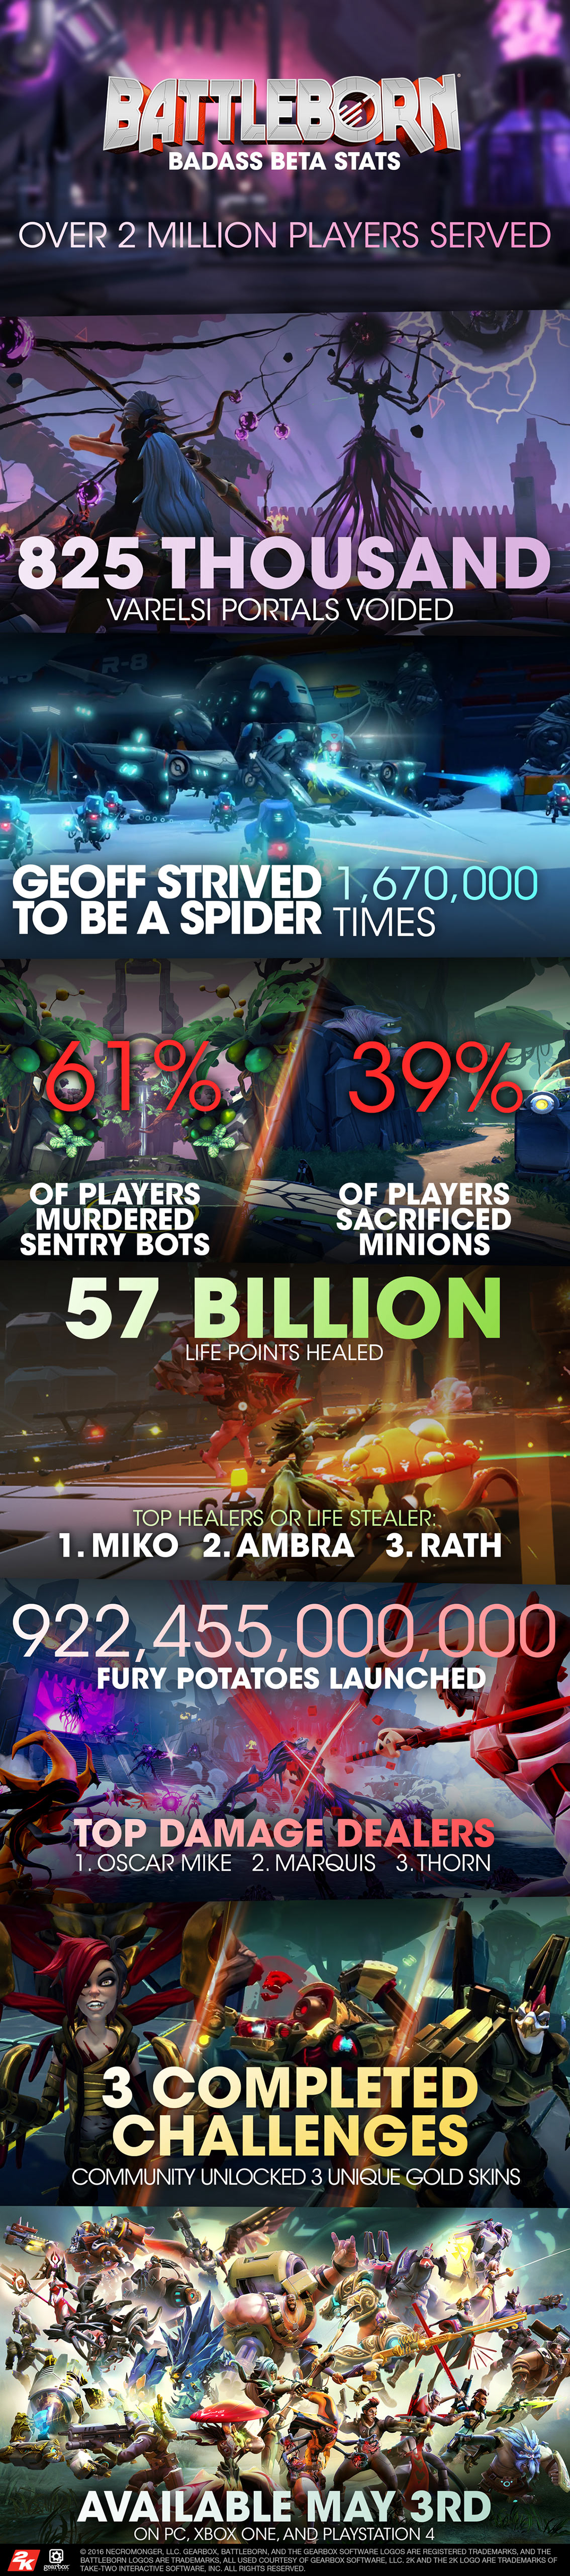 Battleborn Badass Beta Stats Video Game Infographic